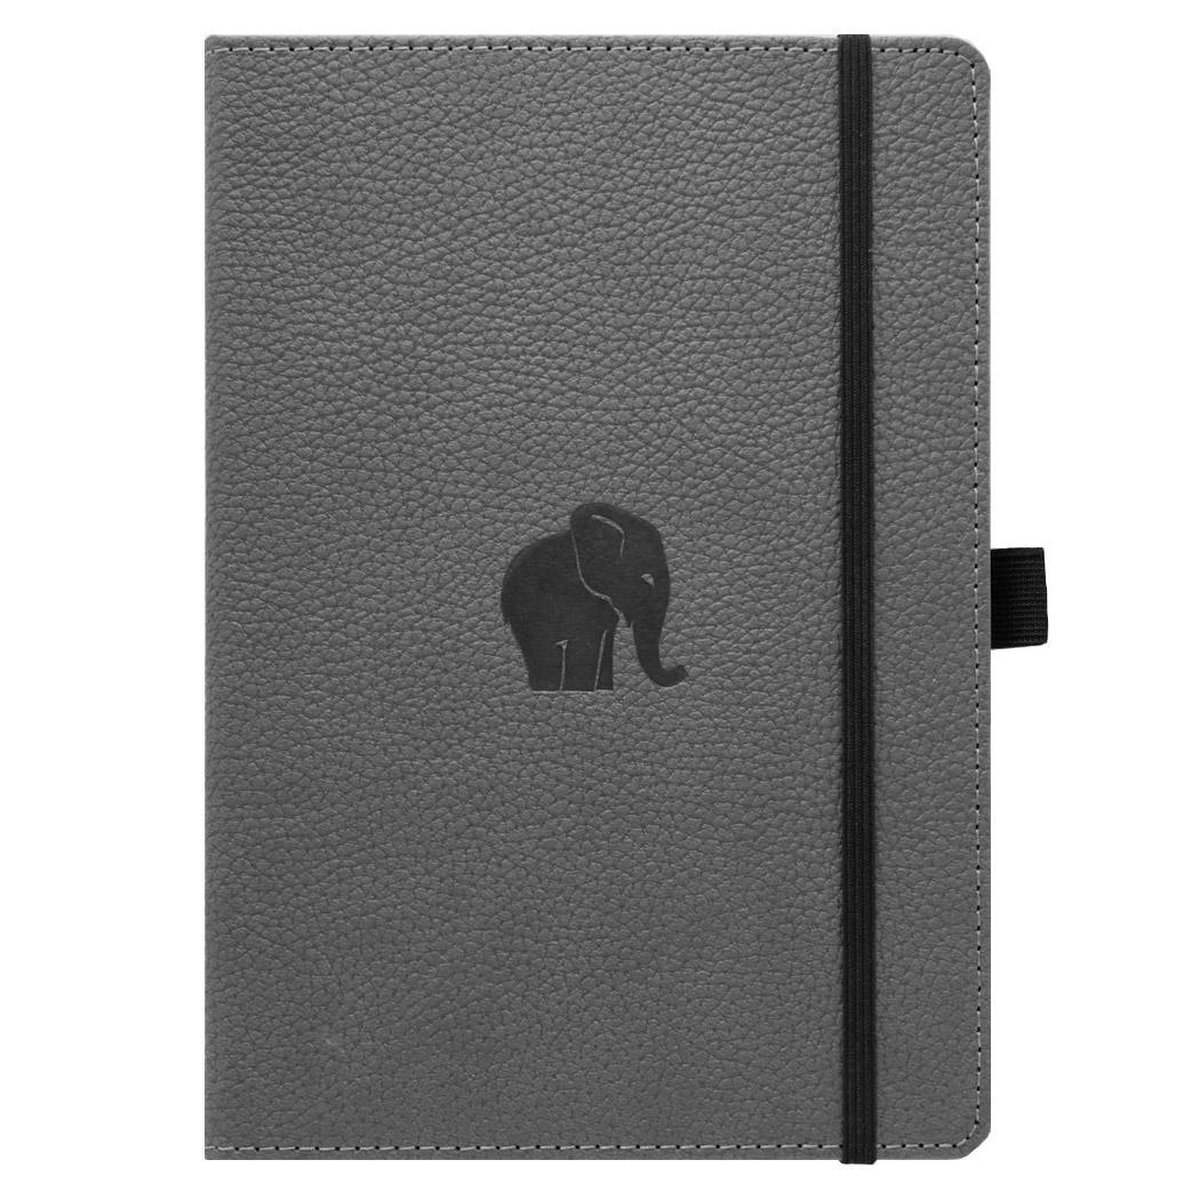 Dingbats Notebooks Dingbats A4+ Wildlife Grey Elephant Notebook - Lined